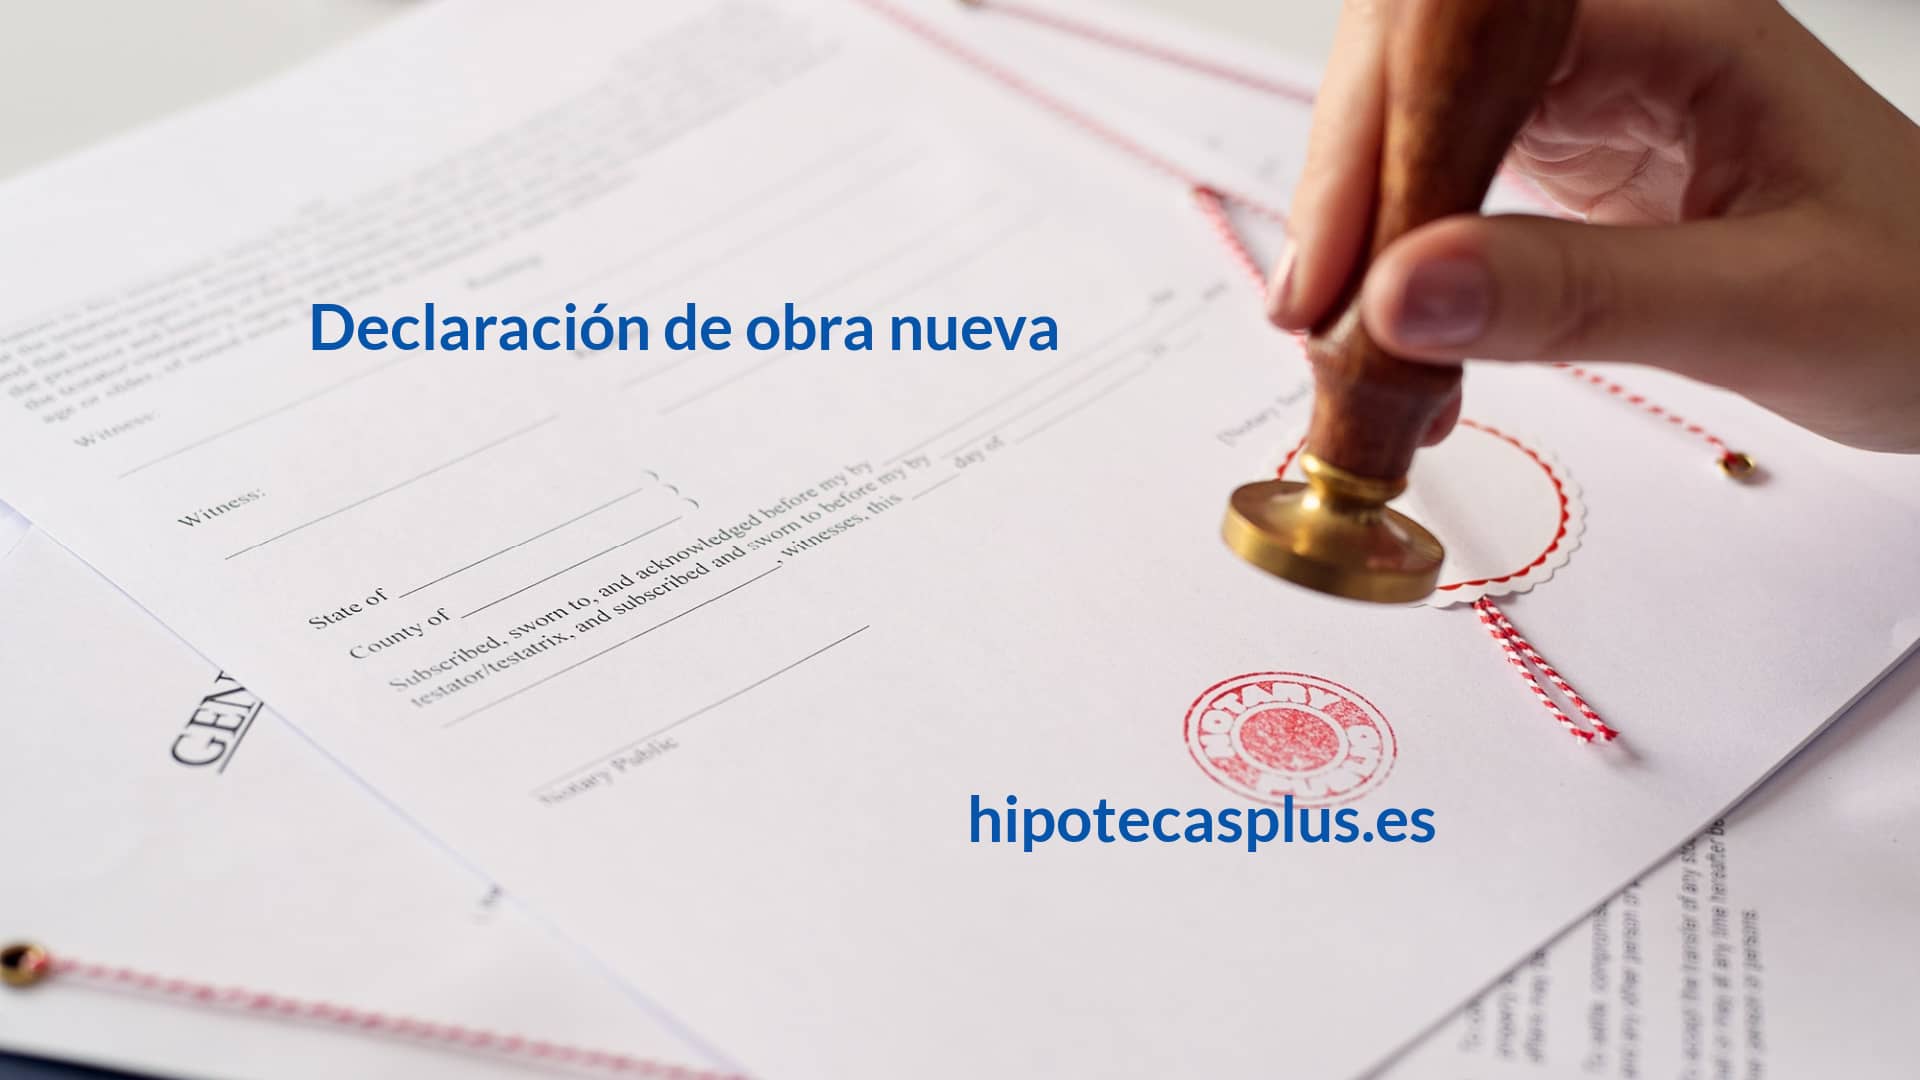 https://www.hipotecasplus.es/wp-content/uploads/HipotecasPlus-Declaracion-de-obra-nueva-.jpg